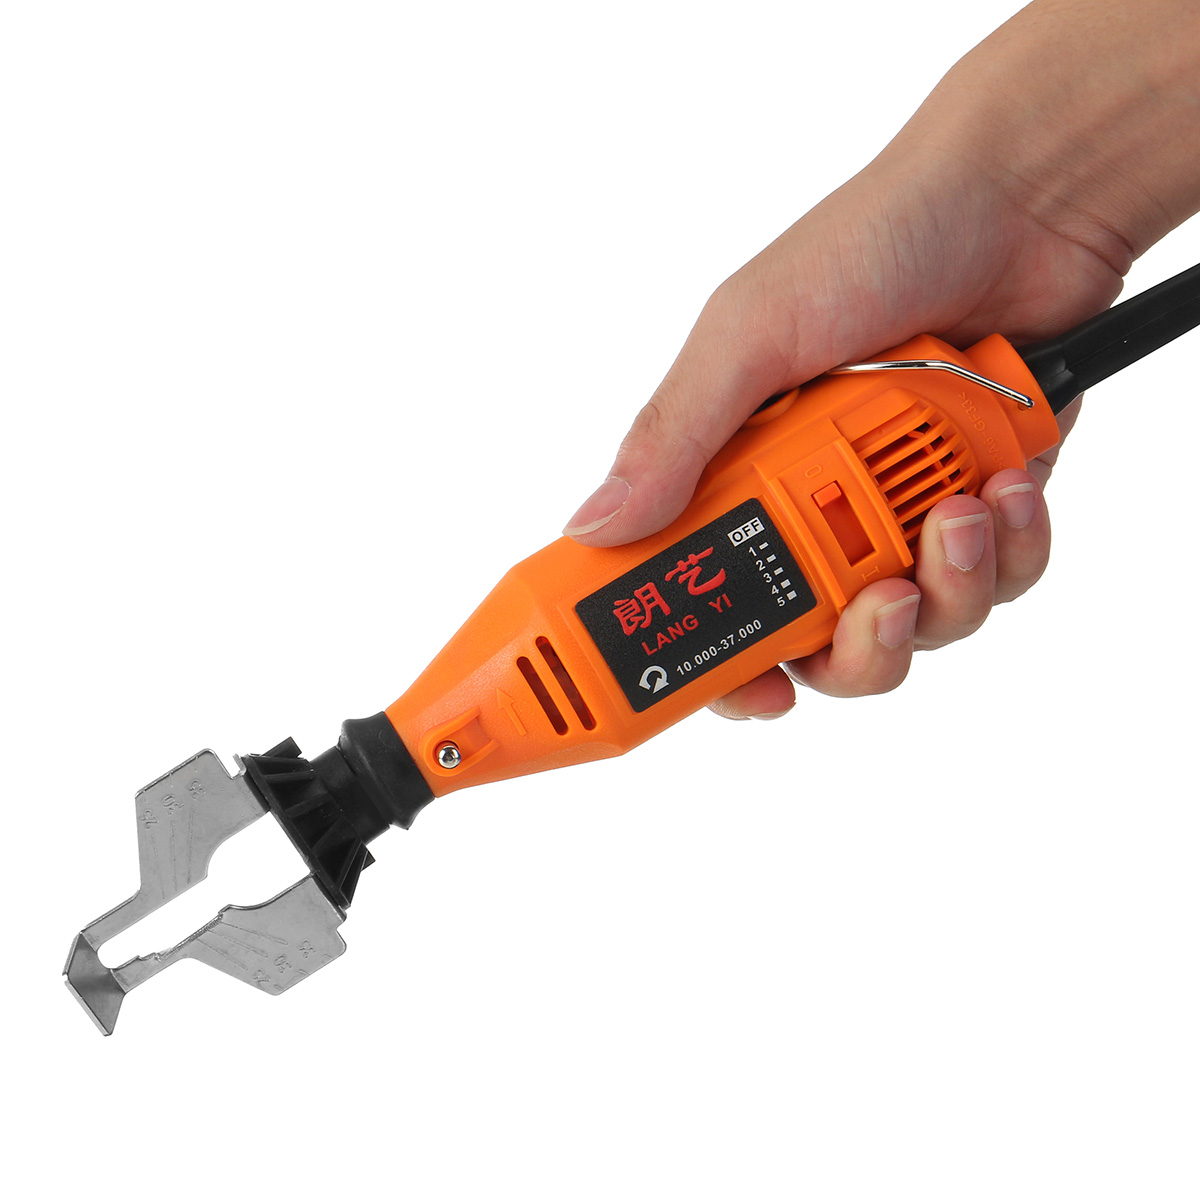 Portable-Chainsaw-Sharpener-Electric-Grinder-Chain-Saw-Grinder-File-Pro-Tools-Set-1729955-10